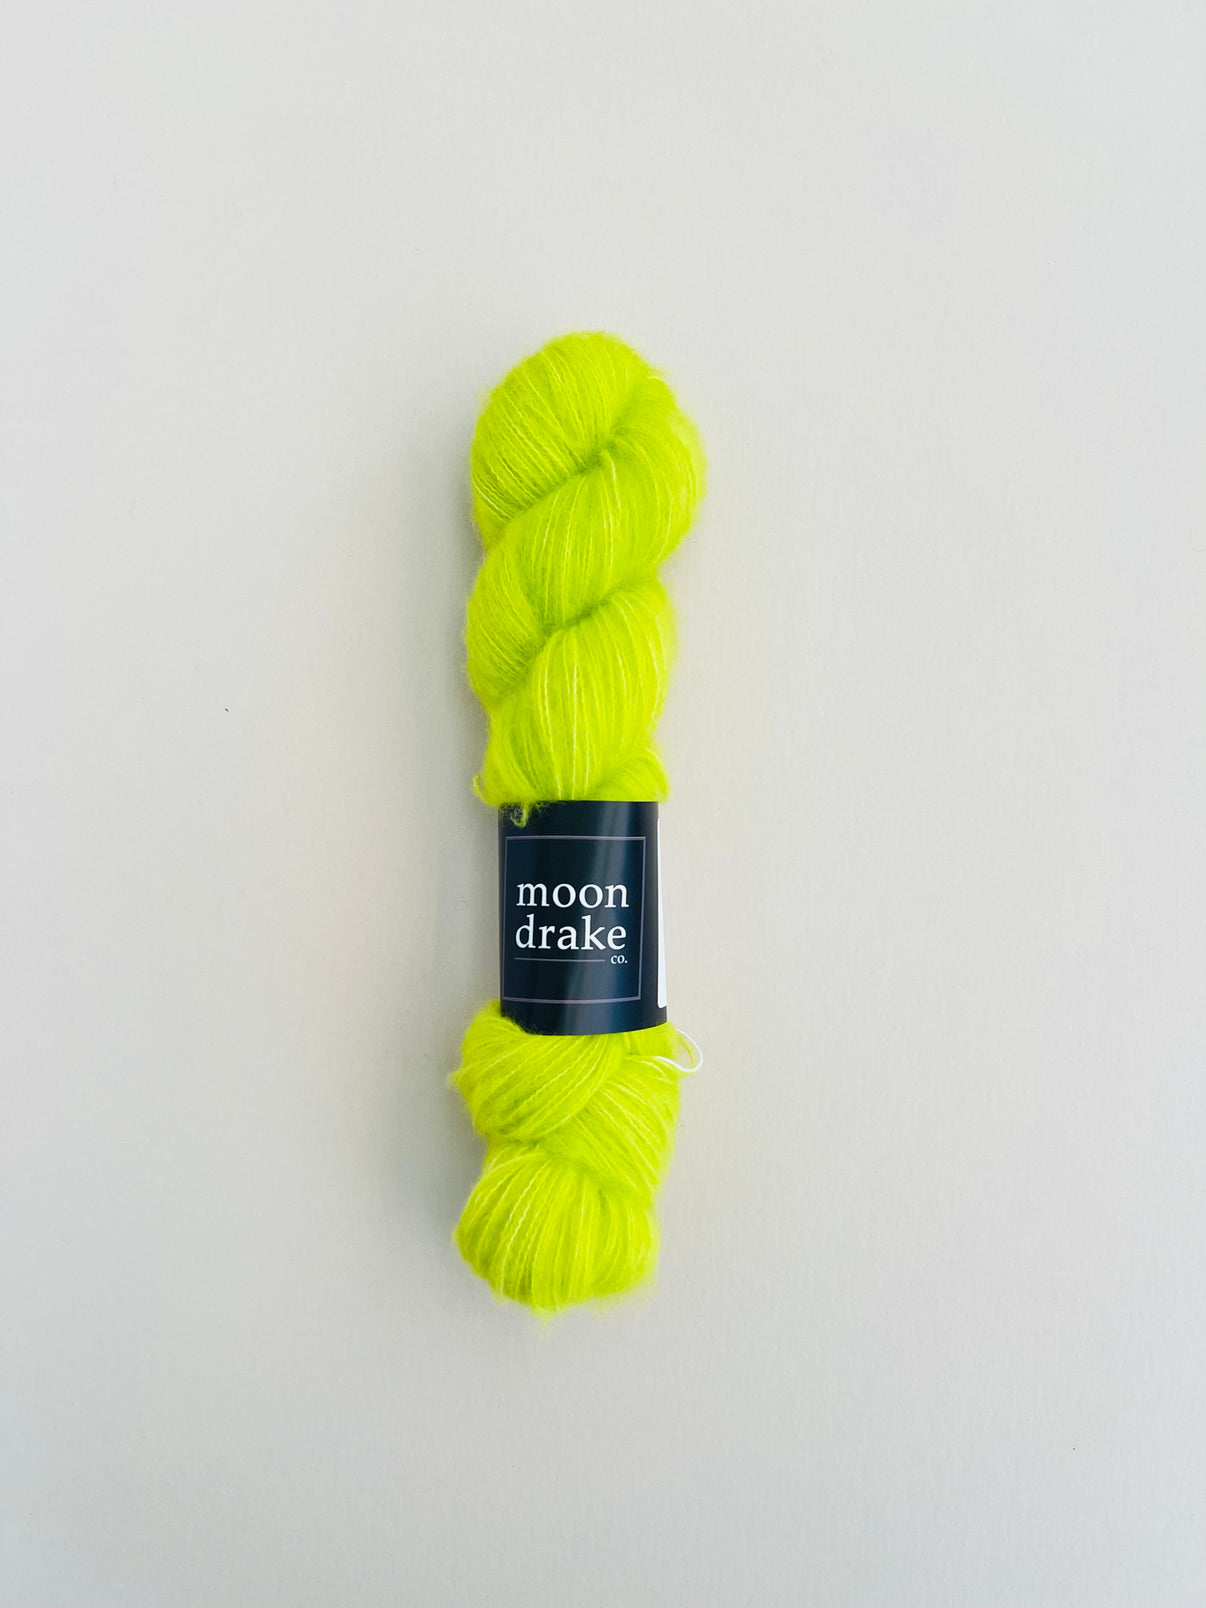 An acid green skein of textured yarn.